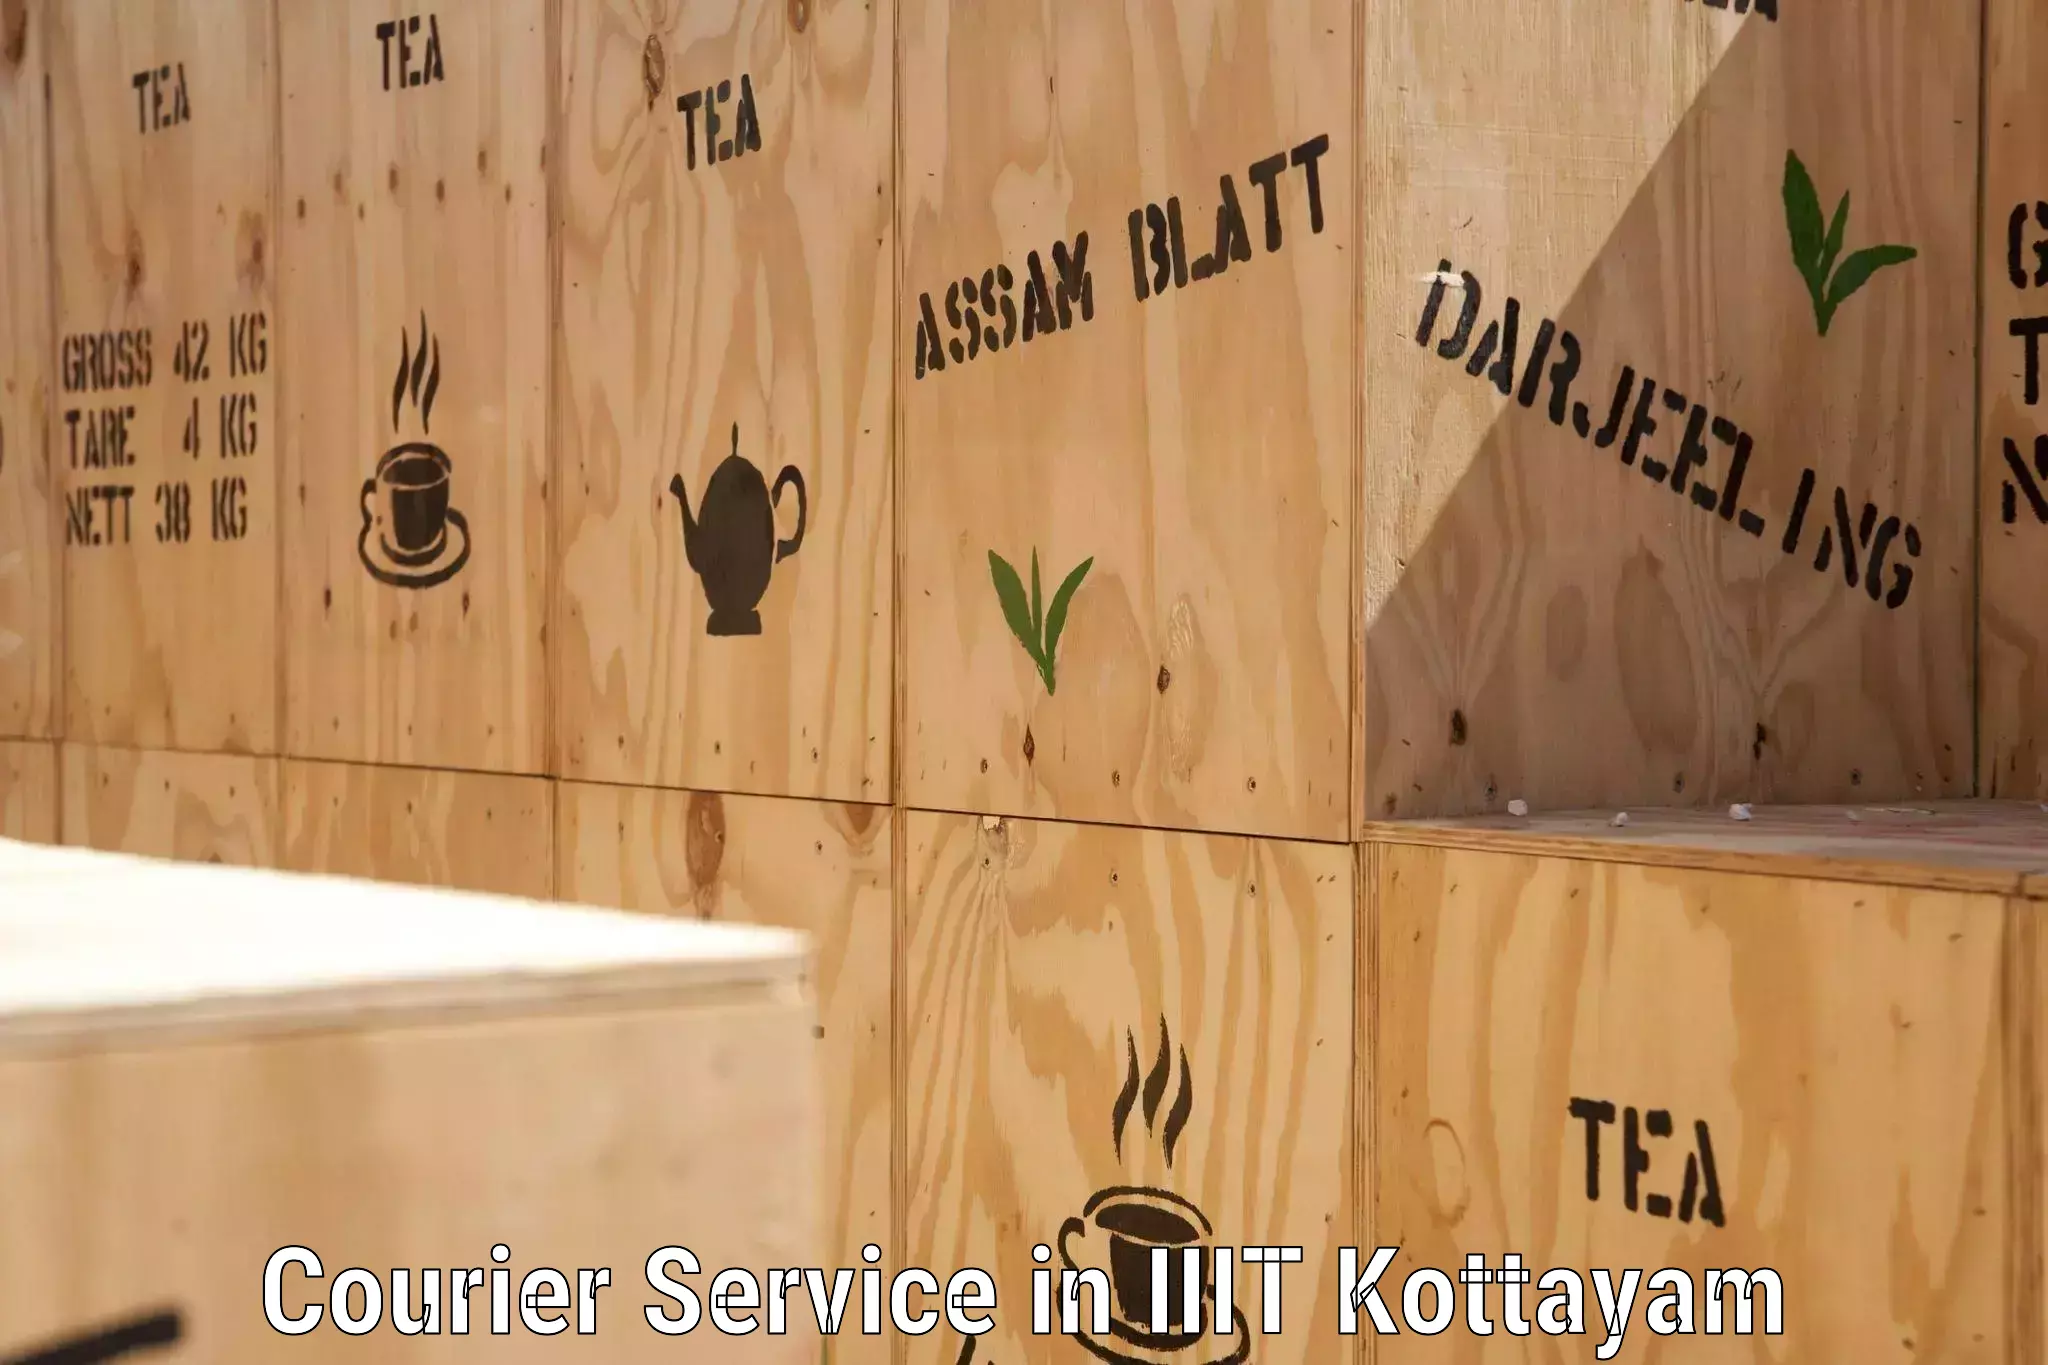 Secure package delivery in IIIT Kottayam